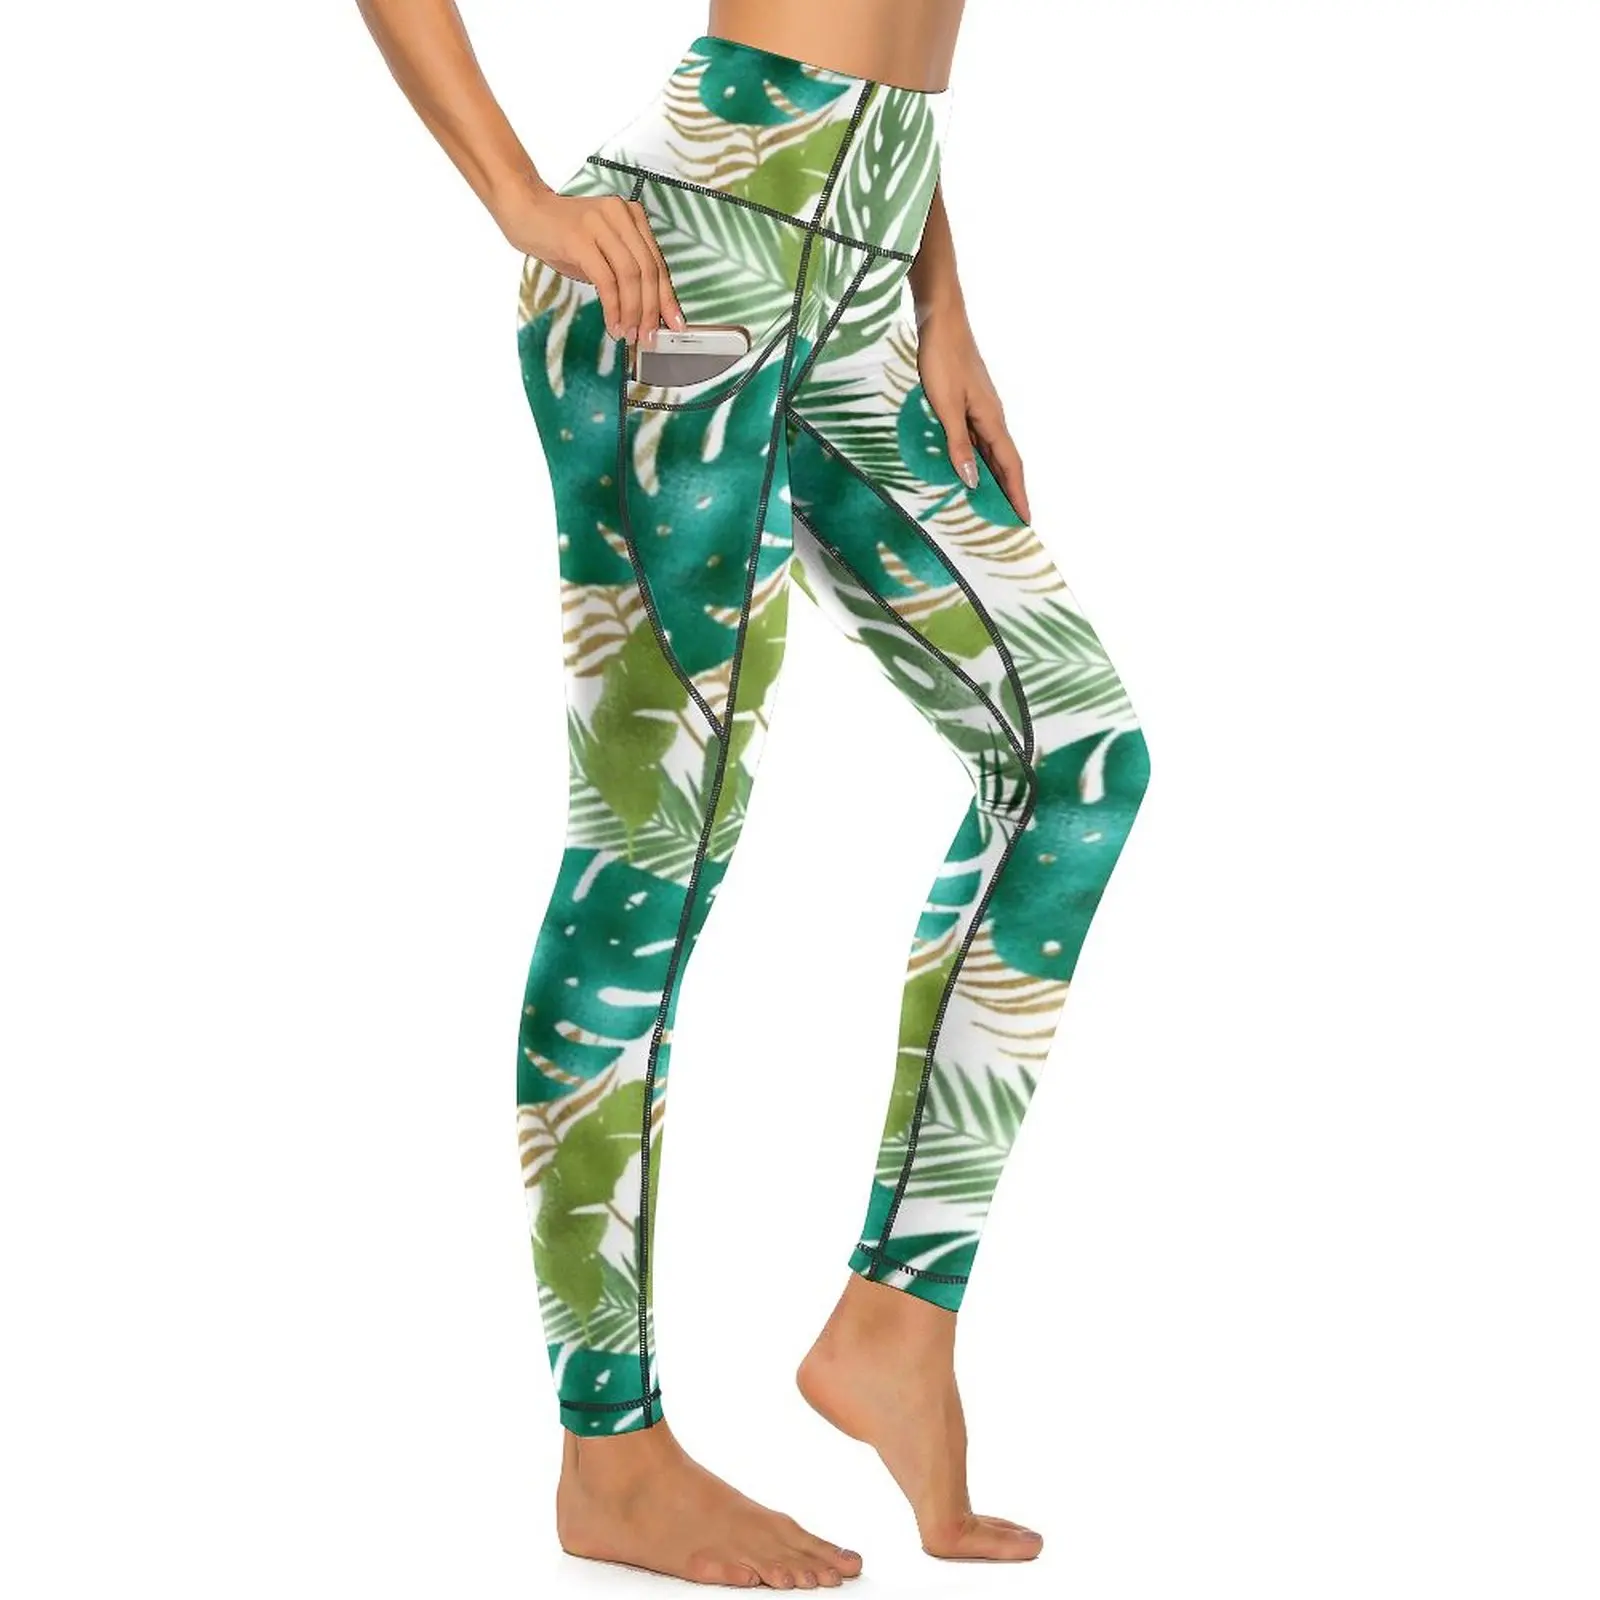 

Variety Metallic Colors Yoga Pants Sexy Green Palm Leaf Design Leggings High Waist Running Leggins Funny Stretchy Sports Tights